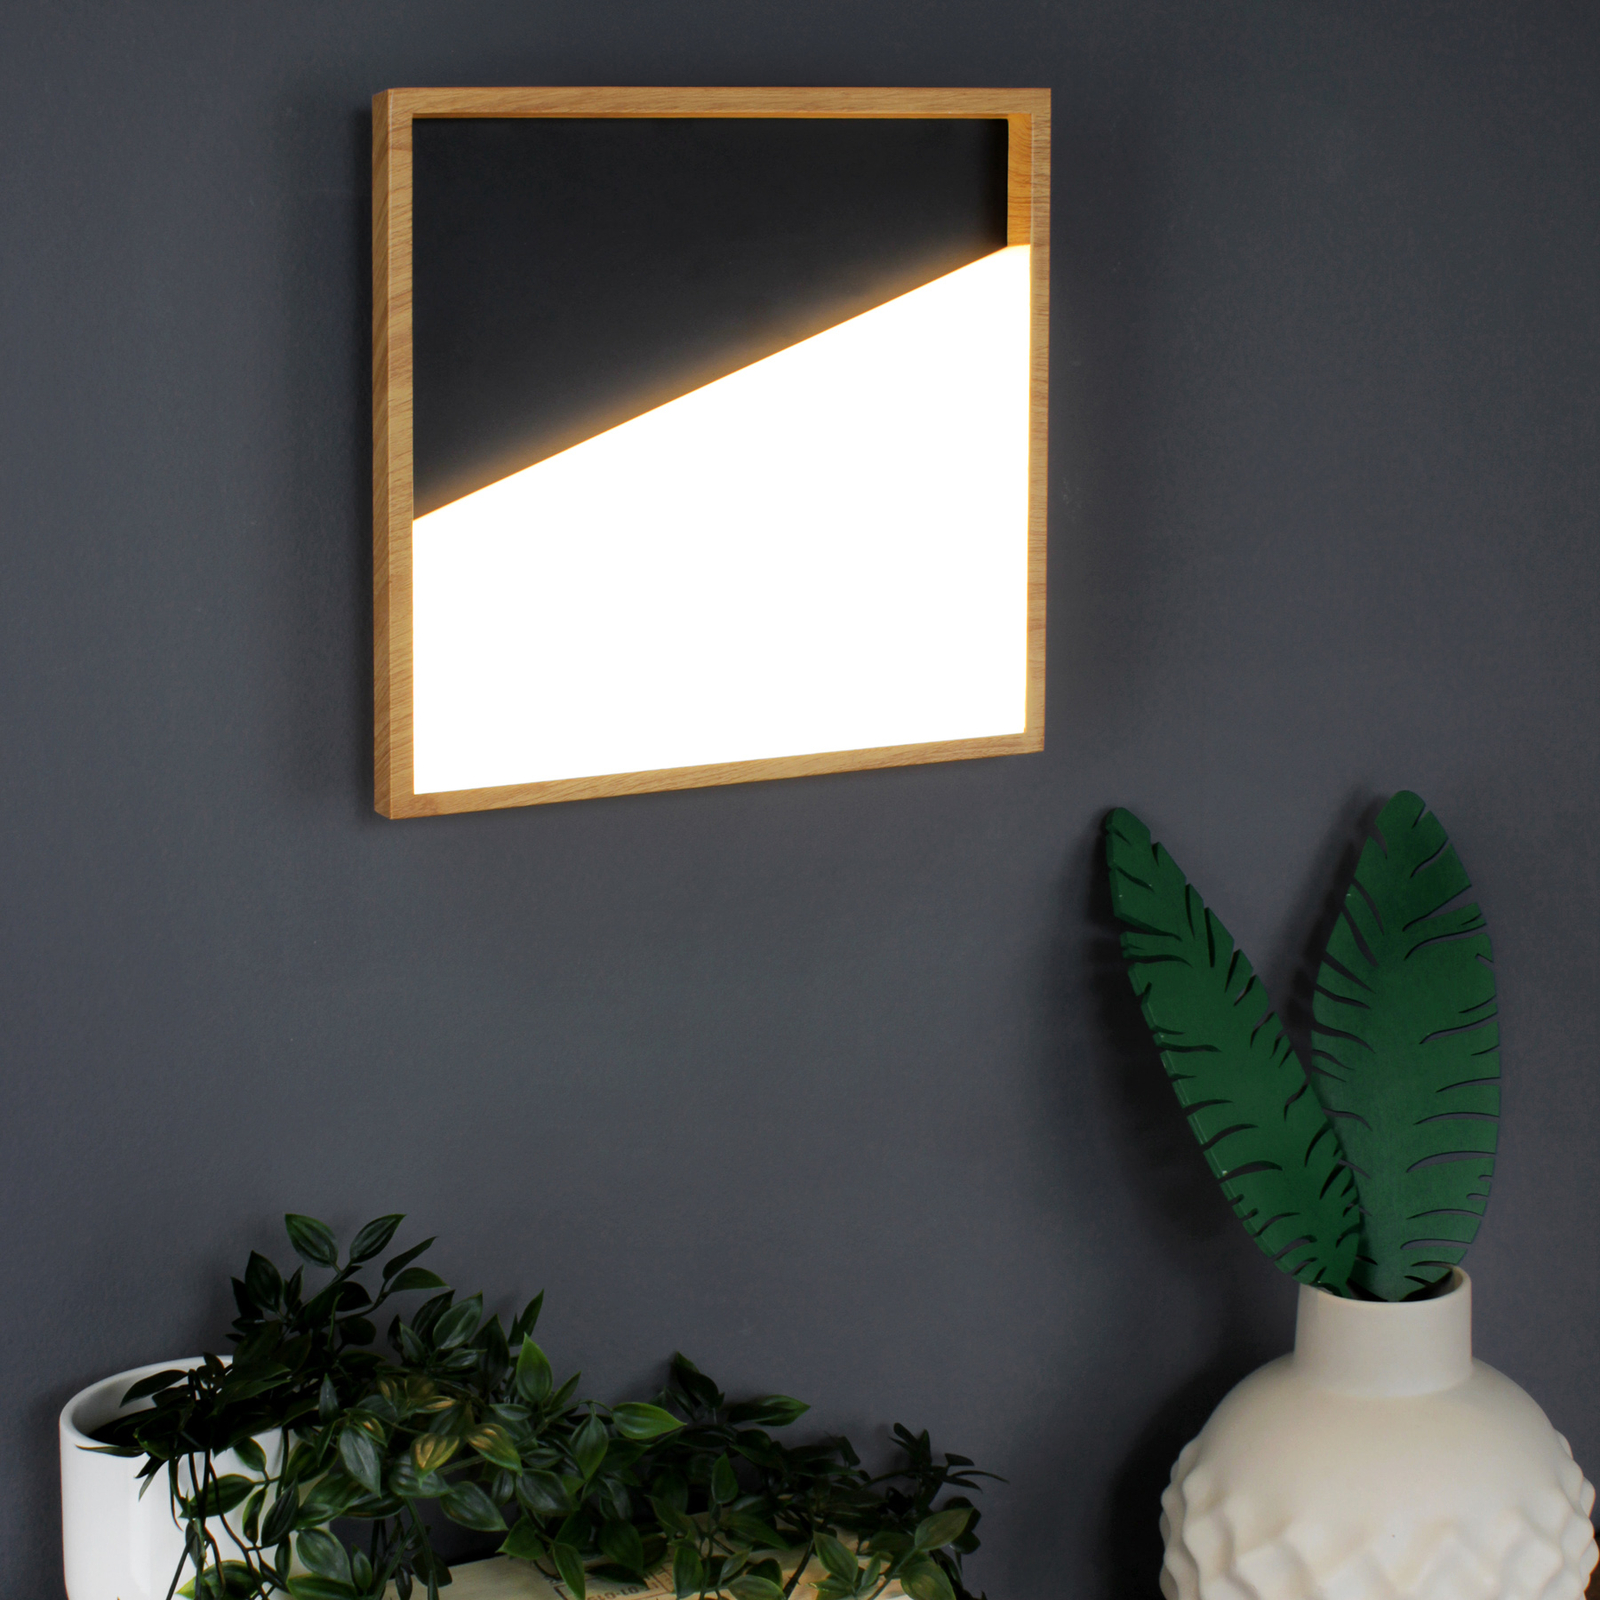 Vista LED-es fali lámpa, fekete/világos fa, 30 x 30 cm